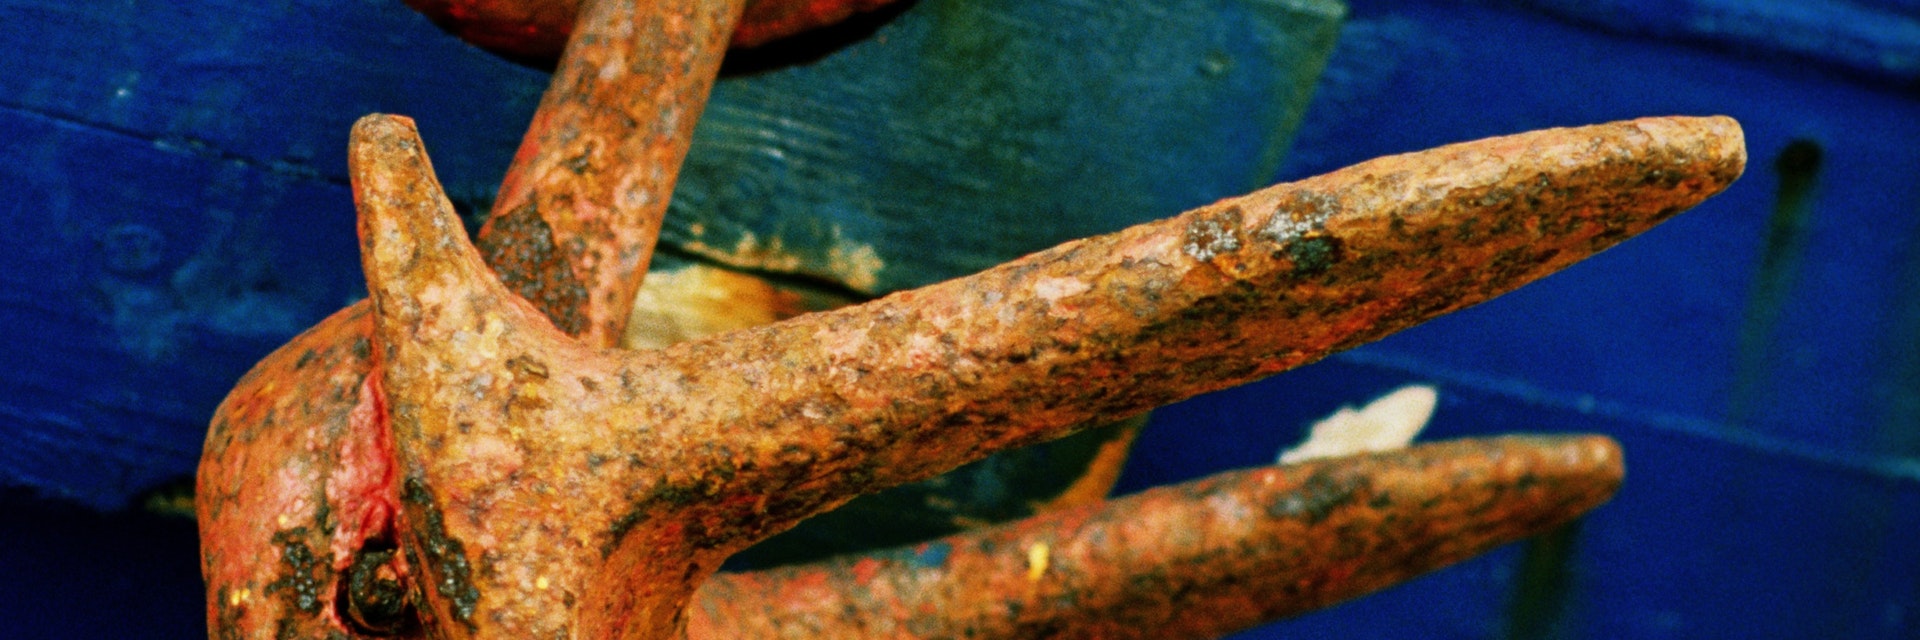 Rusty anchor.